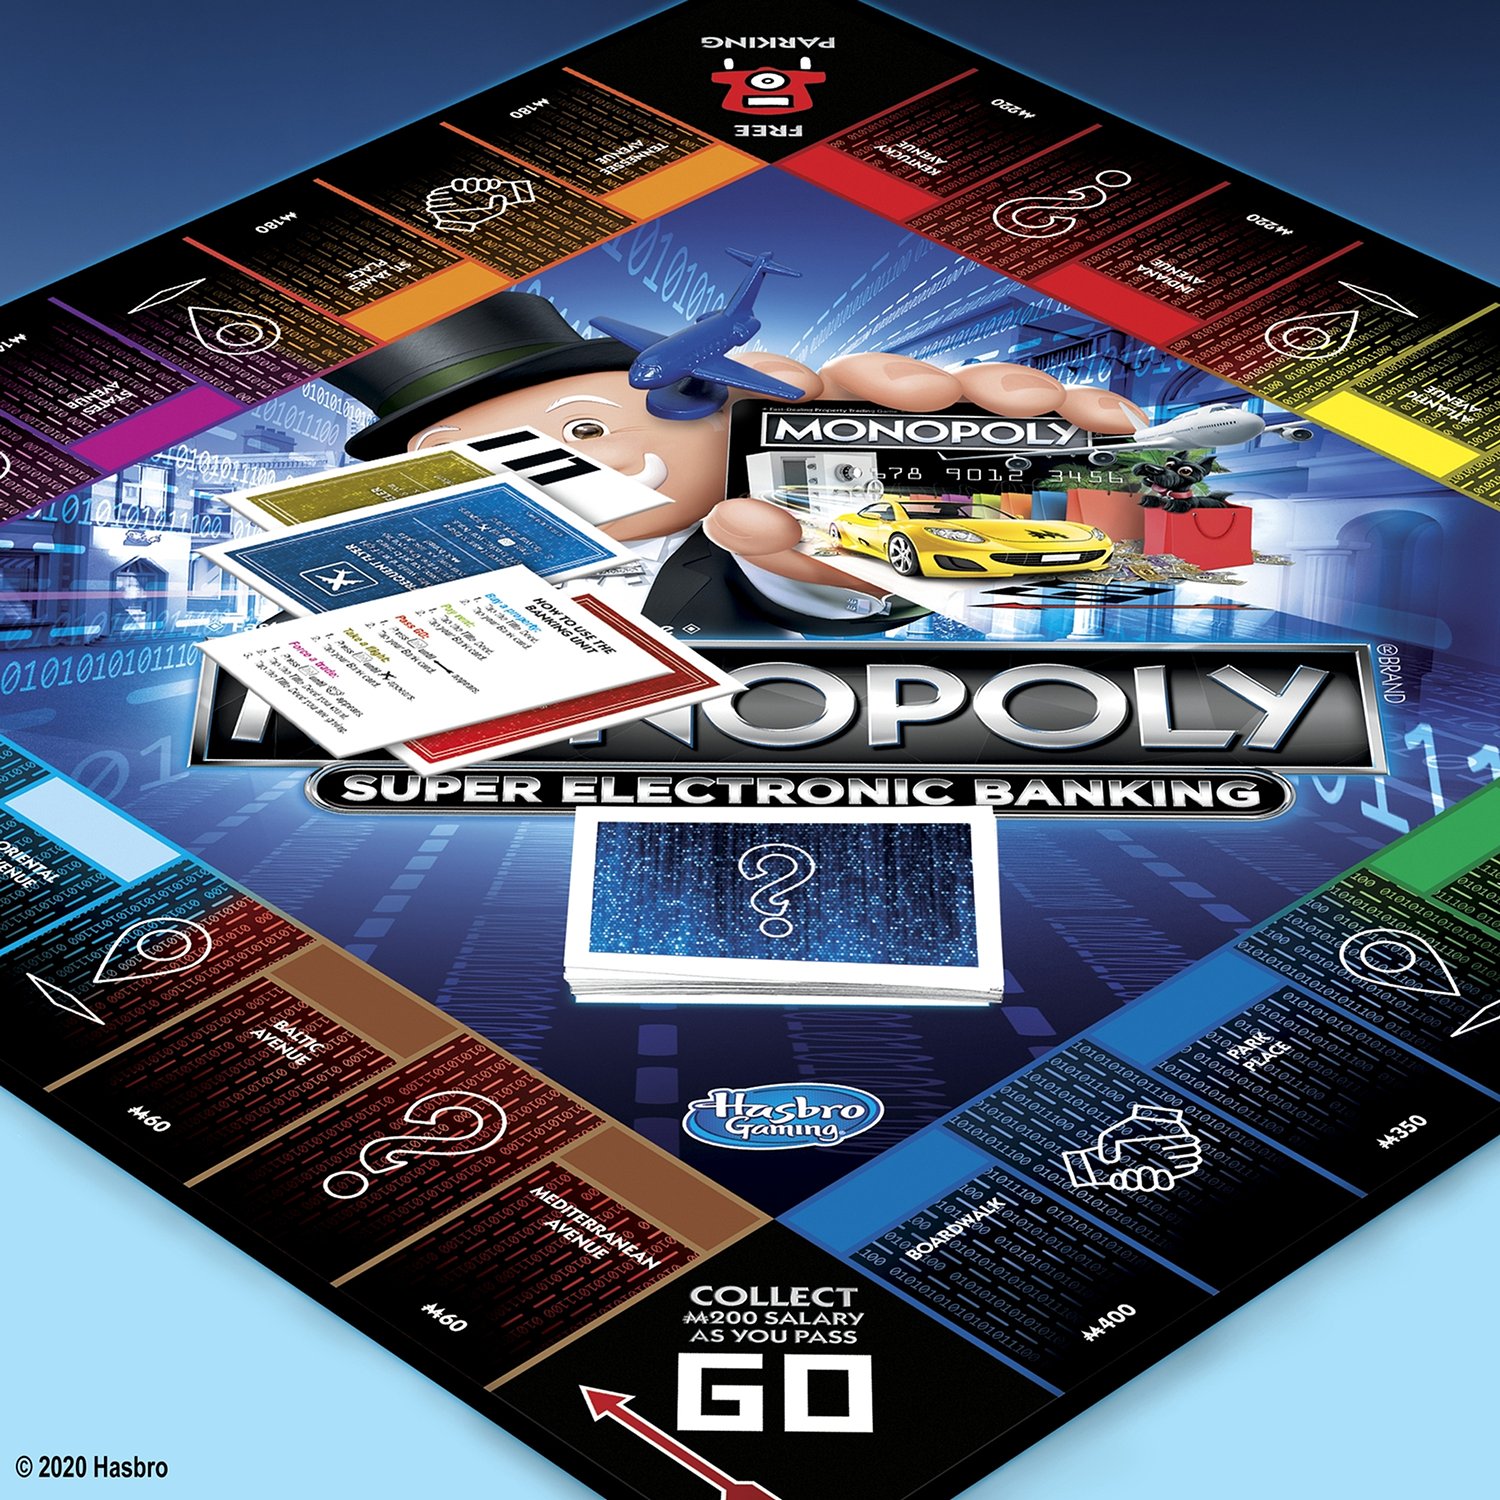 Игра настольная Monopoly Монополия Бонусы без границ E8978121